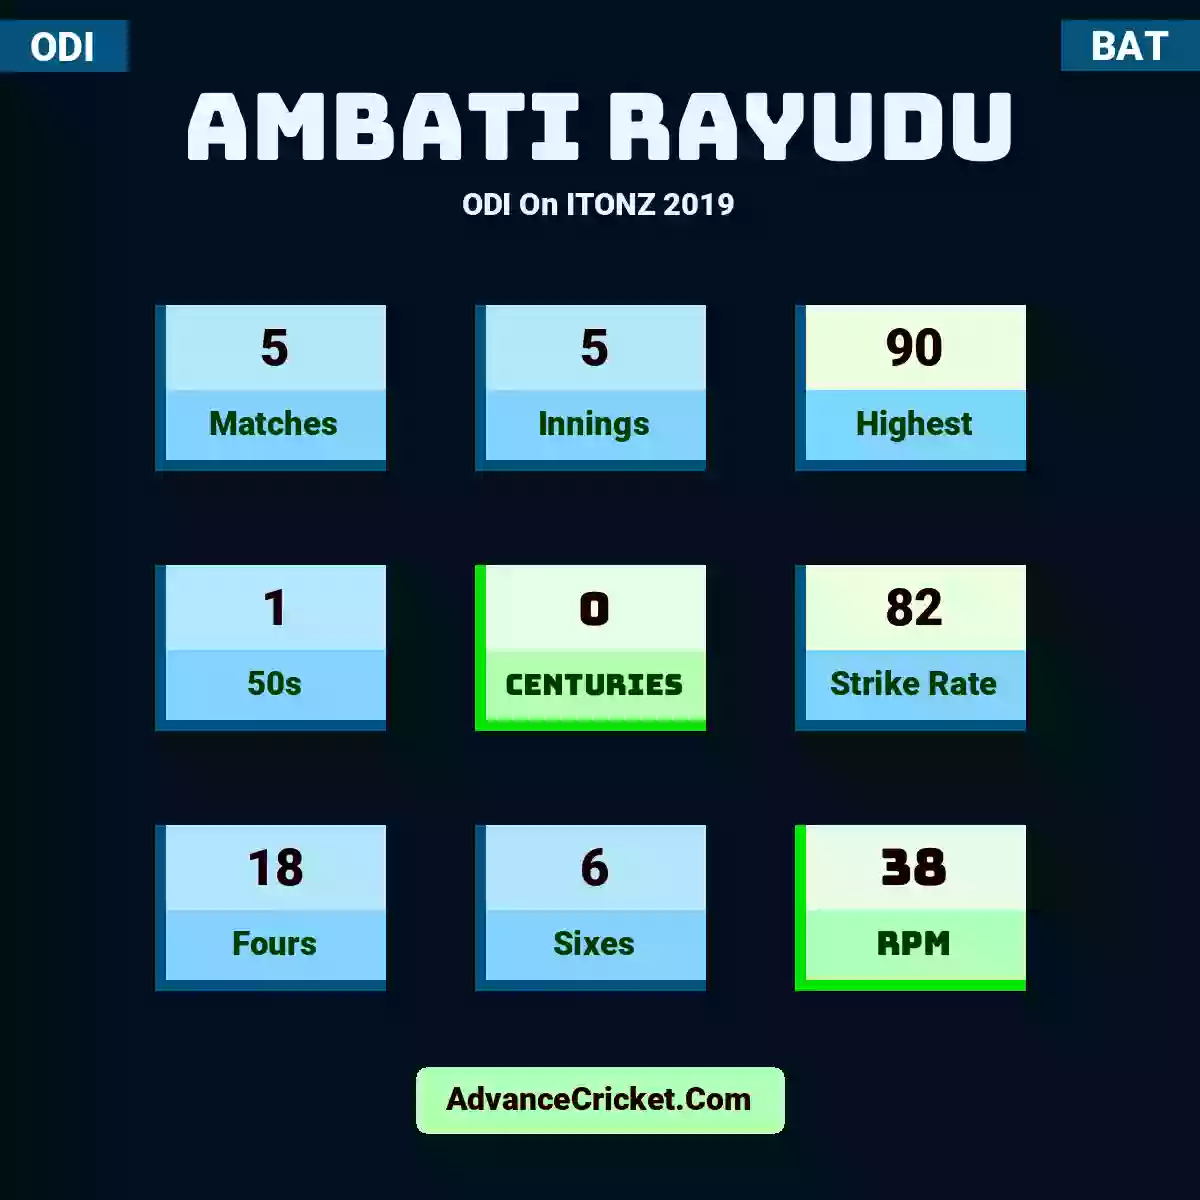 Ambati Rayudu ODI  On ITONZ 2019, Ambati Rayudu played 5 matches, scored 90 runs as highest, 1 half-centuries, and 0 centuries, with a strike rate of 82. A.Rayudu hit 18 fours and 6 sixes, with an RPM of 38.